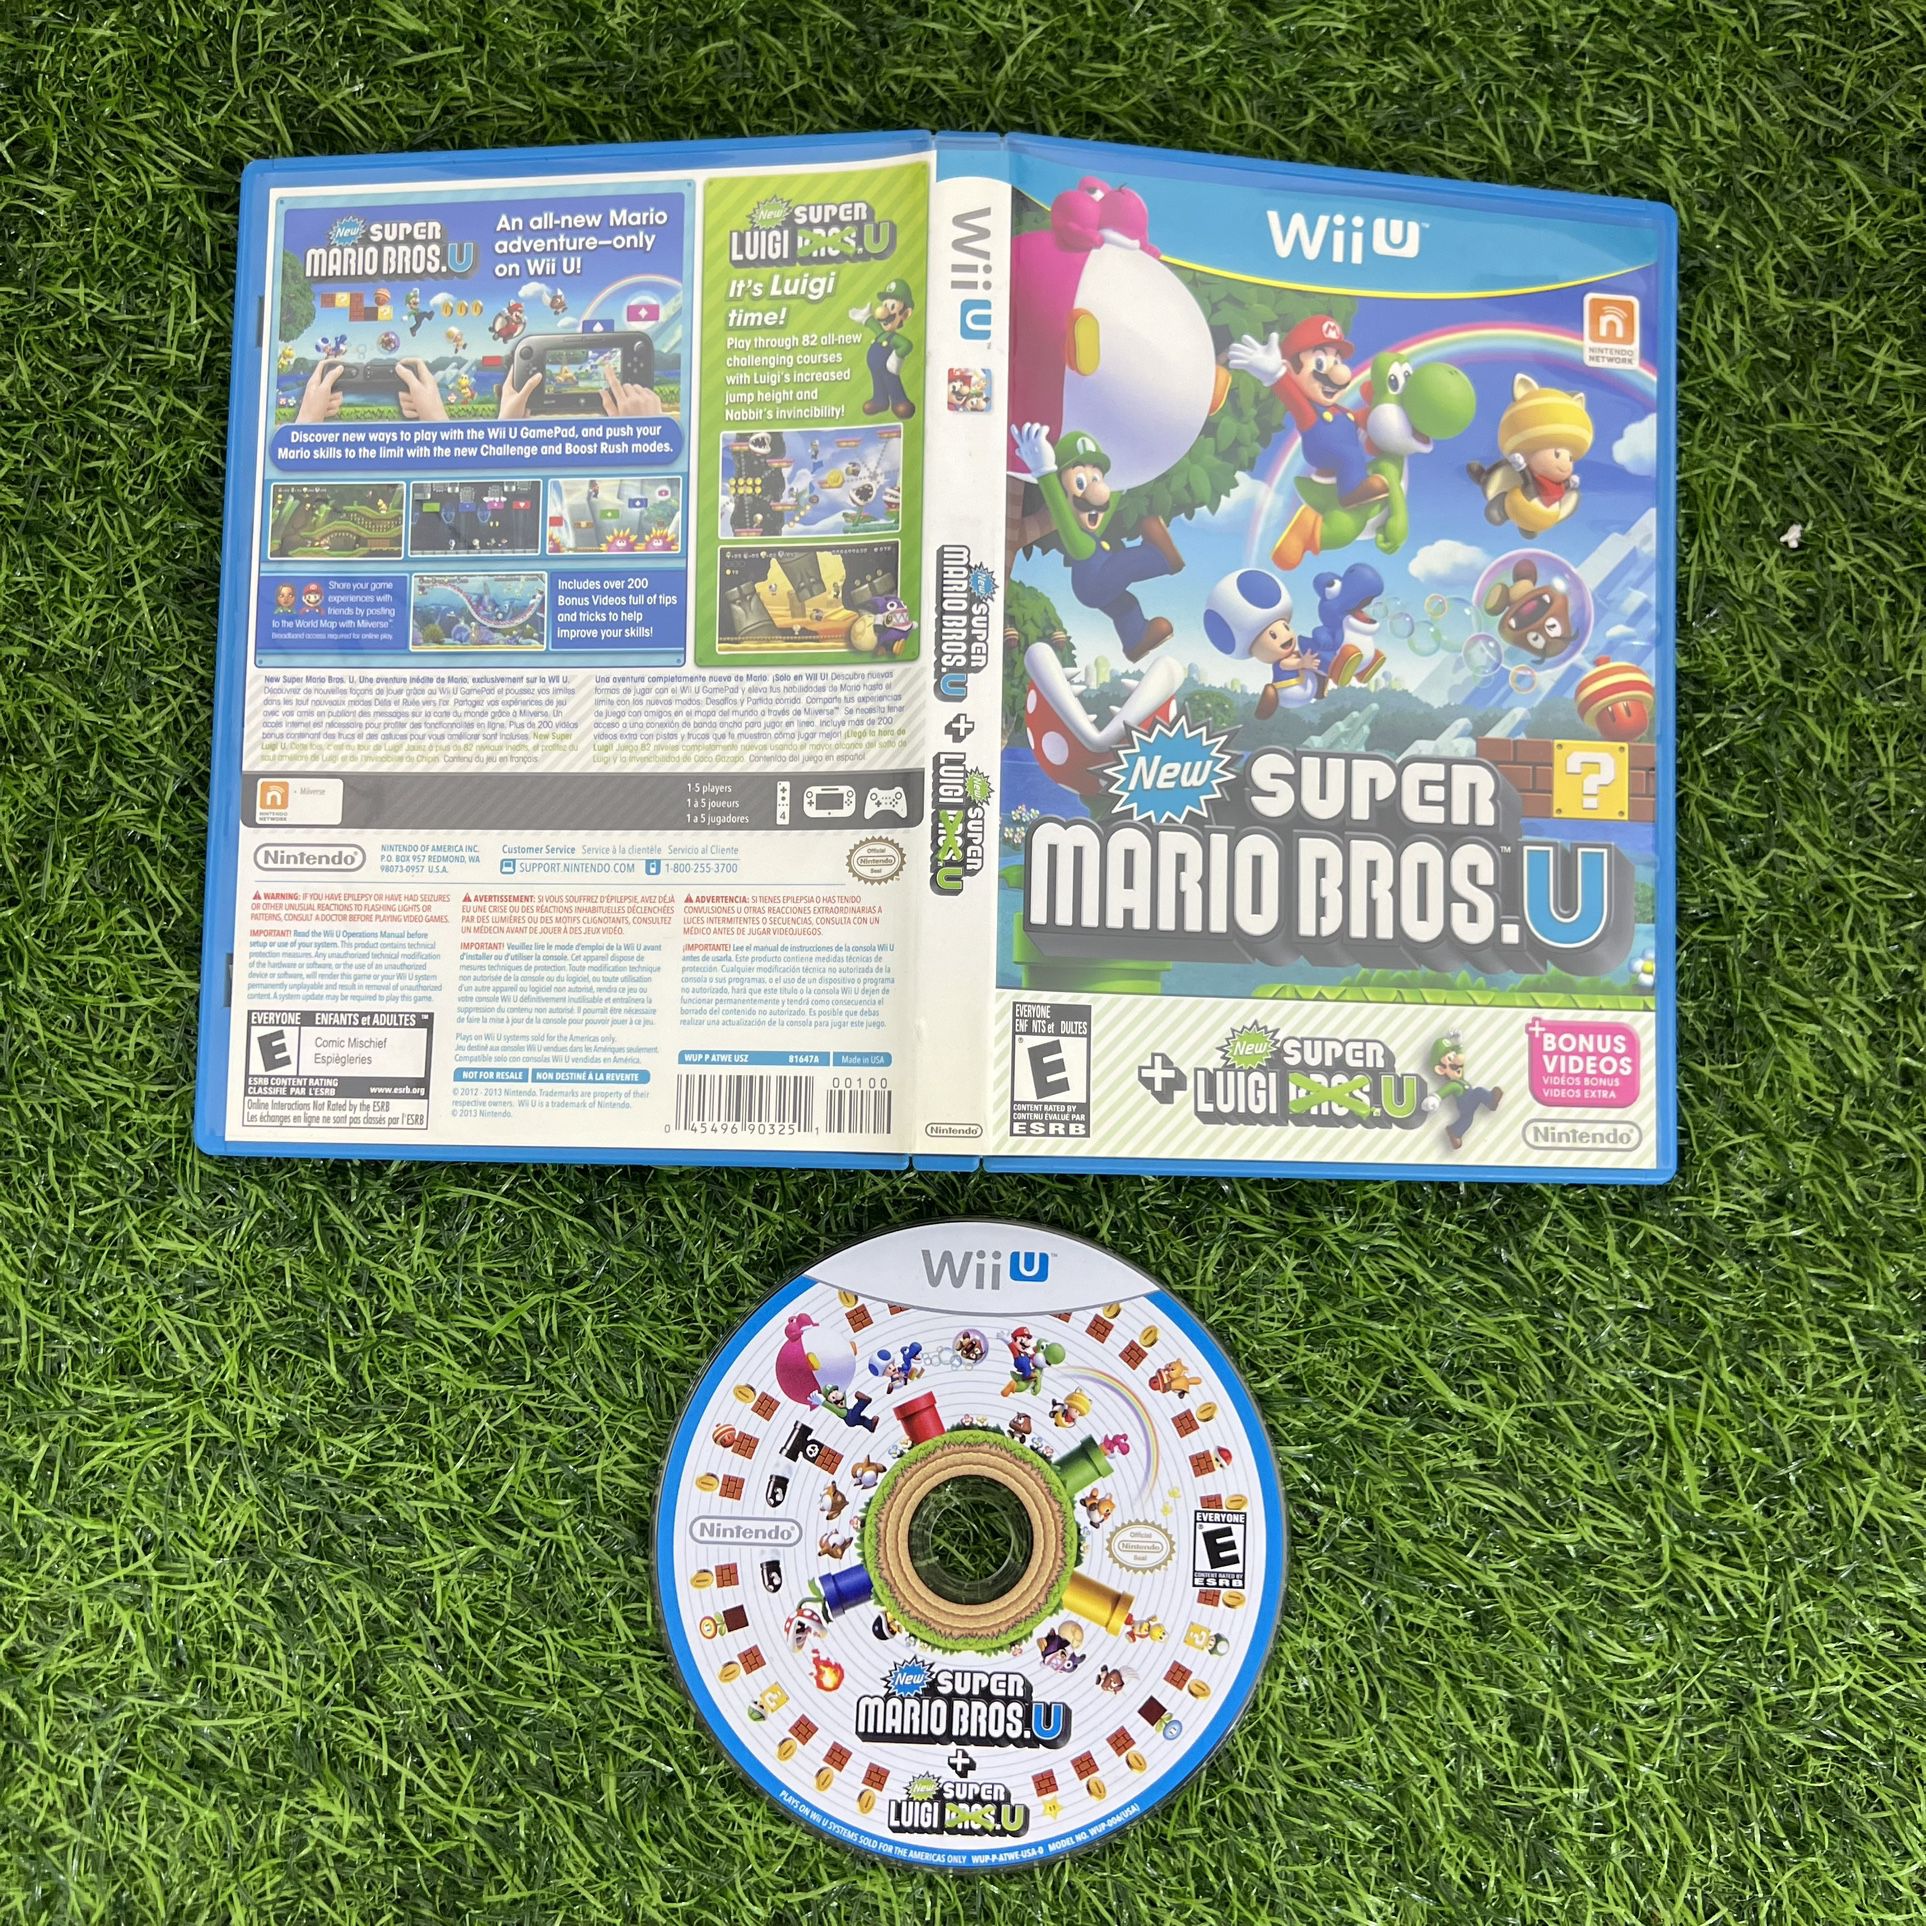 Super Mario Bros. U with New Super Luigi U. (Nintendo Wii U) - No Manual TESTED